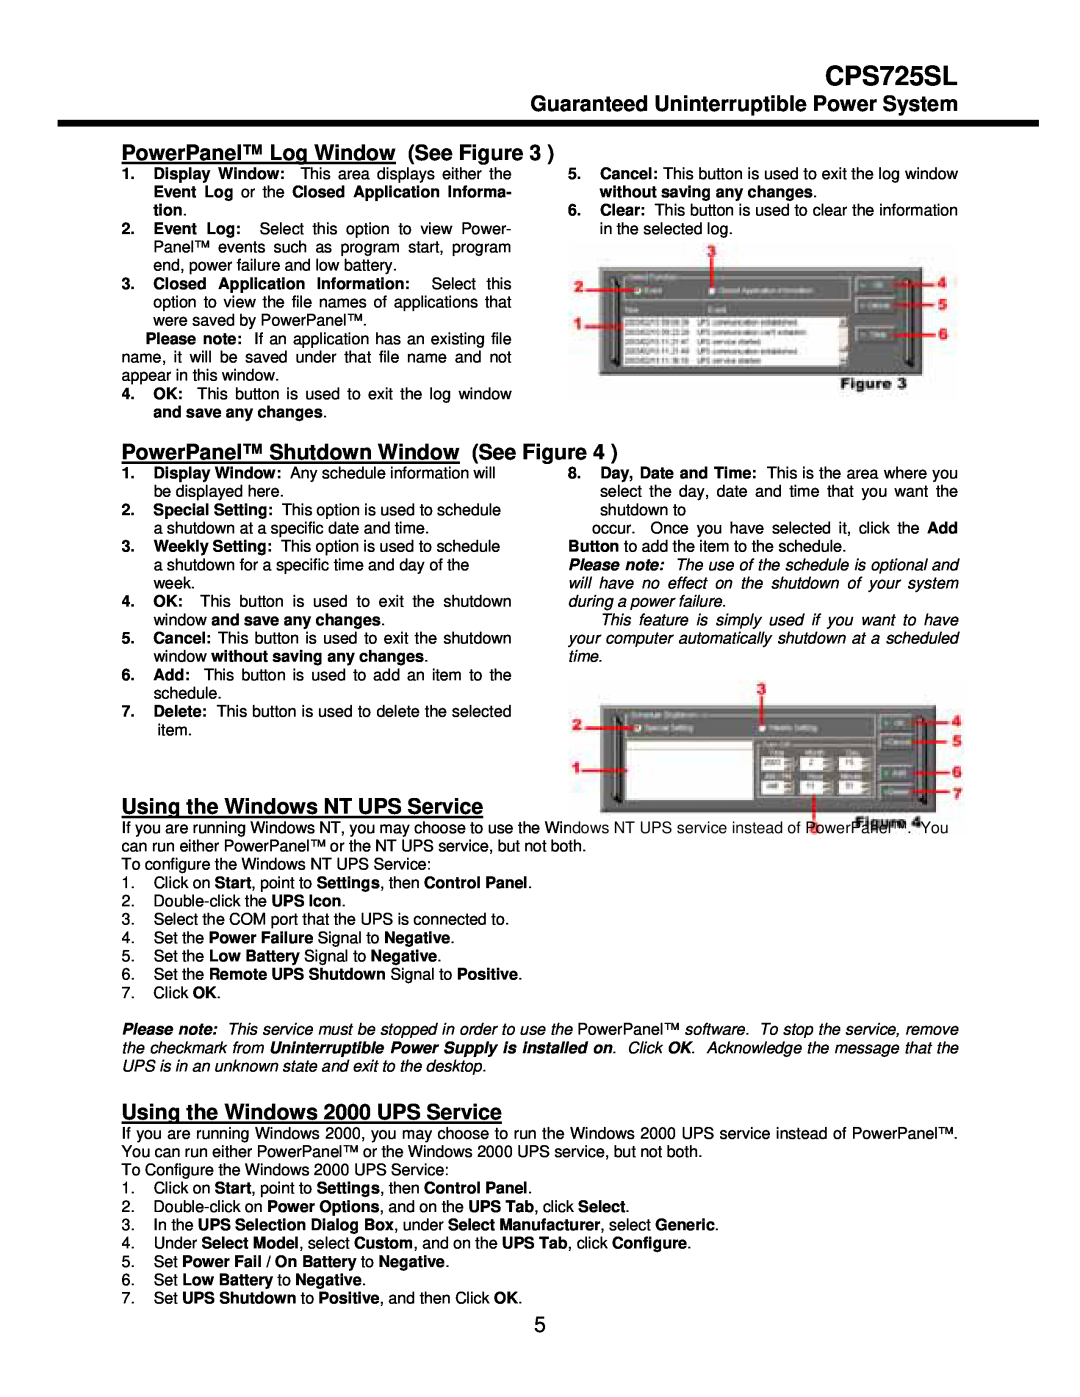 CyberPower Systems CPS725SL user manual PowerPanel Log Window See Figure, PowerPanel Shutdown Window See Figure 